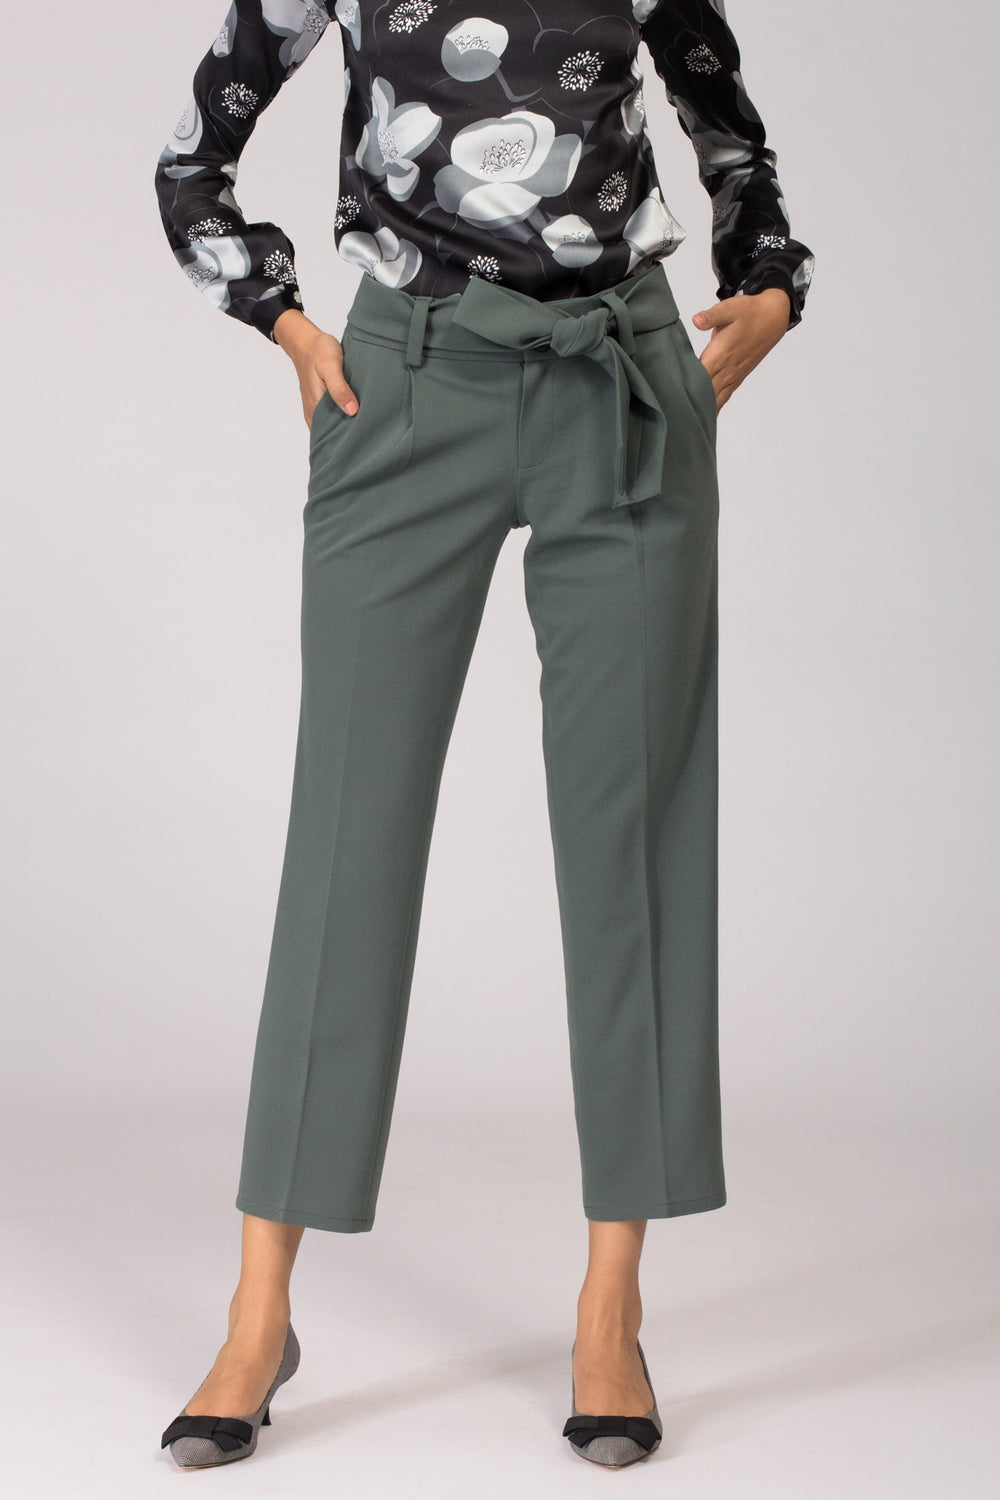 Buy Women Brown Solid Casual Regular Fit Trousers Online  859798  Van  Heusen